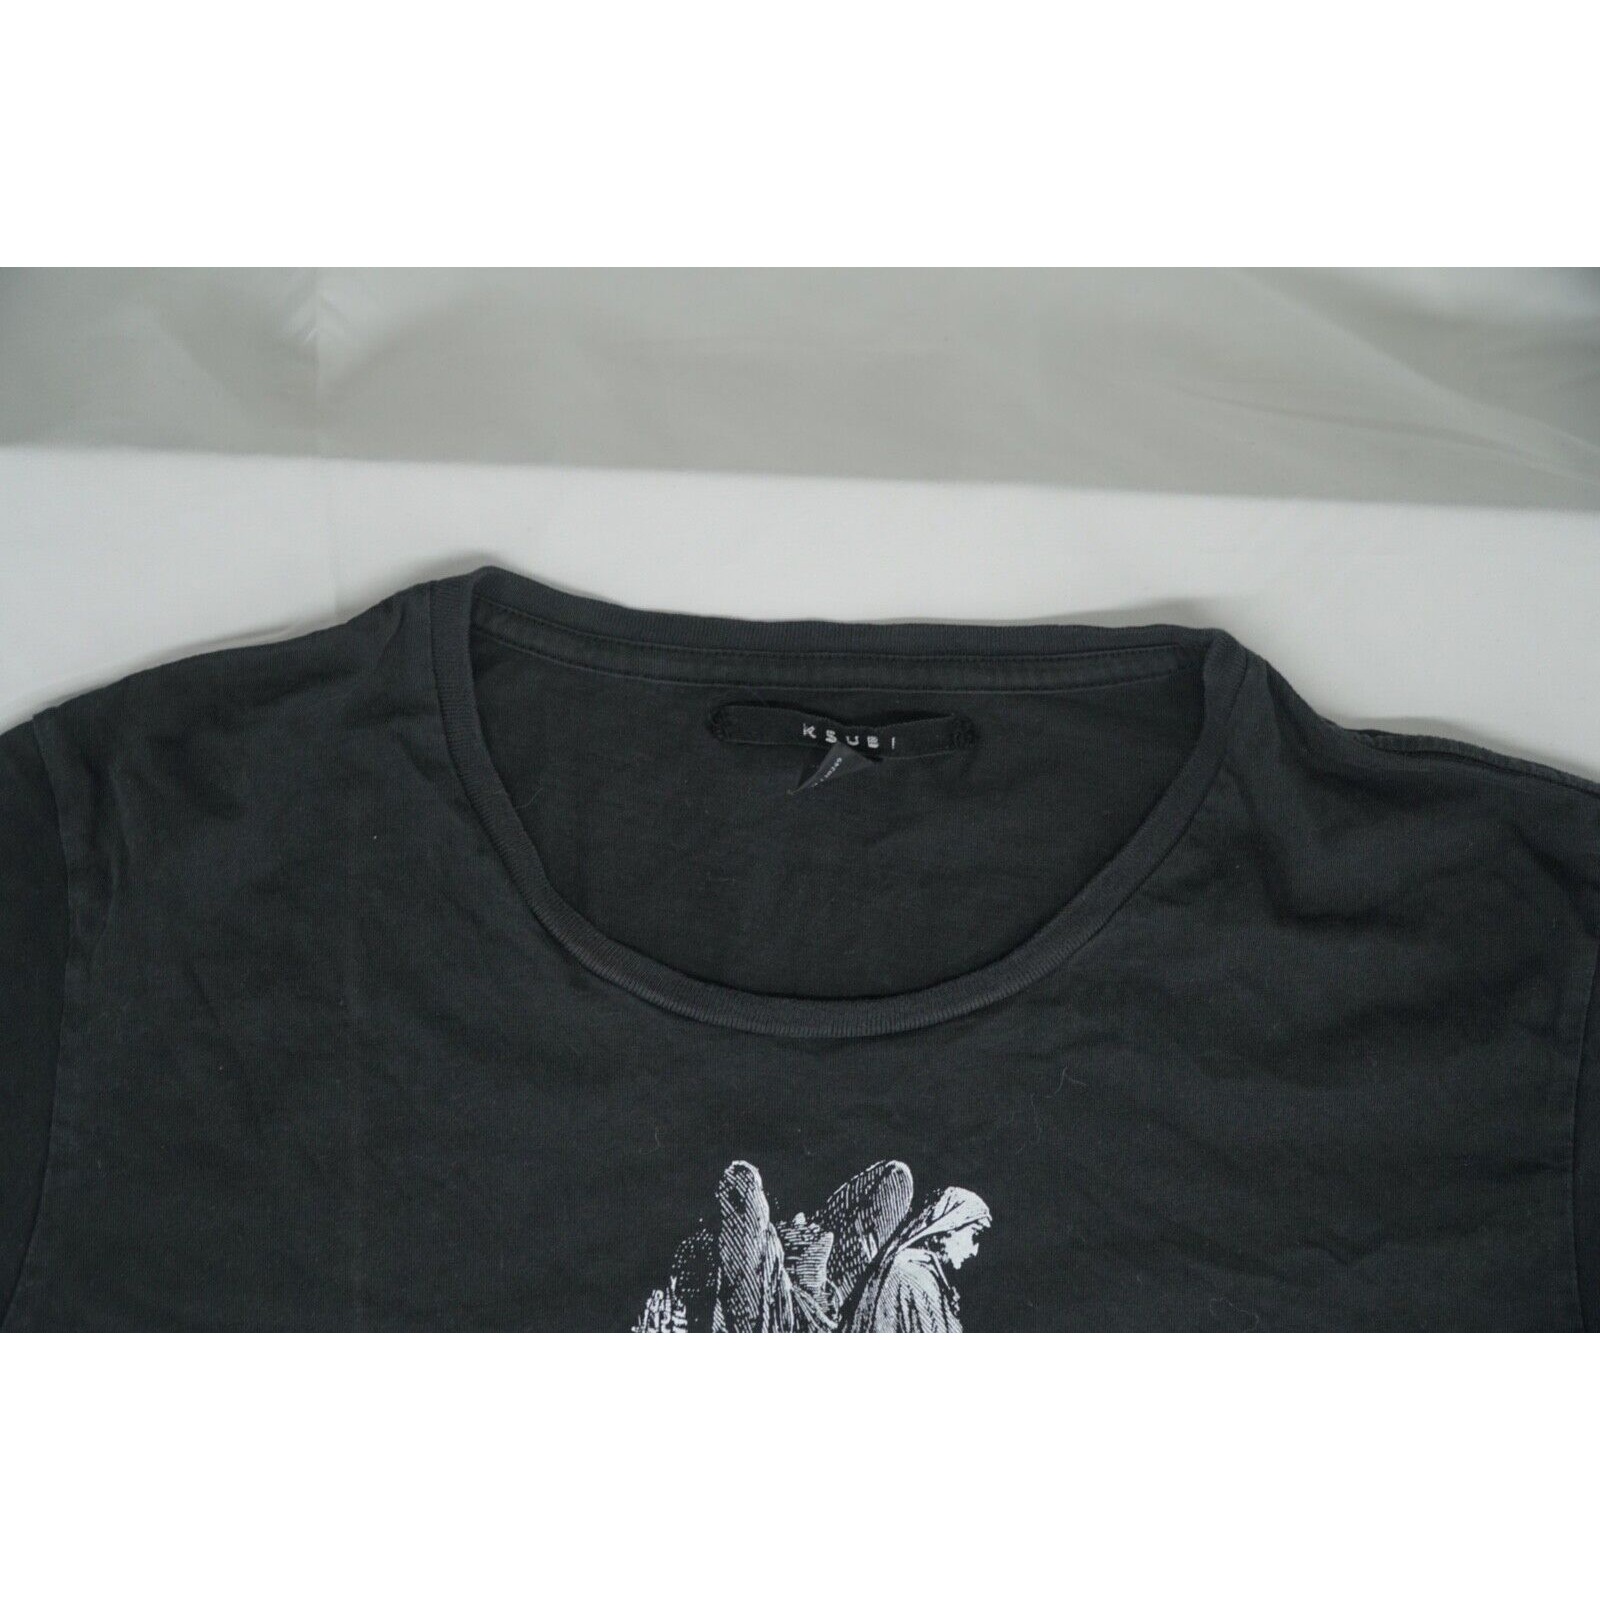 Tsubi Black Cross Graphic T Shirt - 13